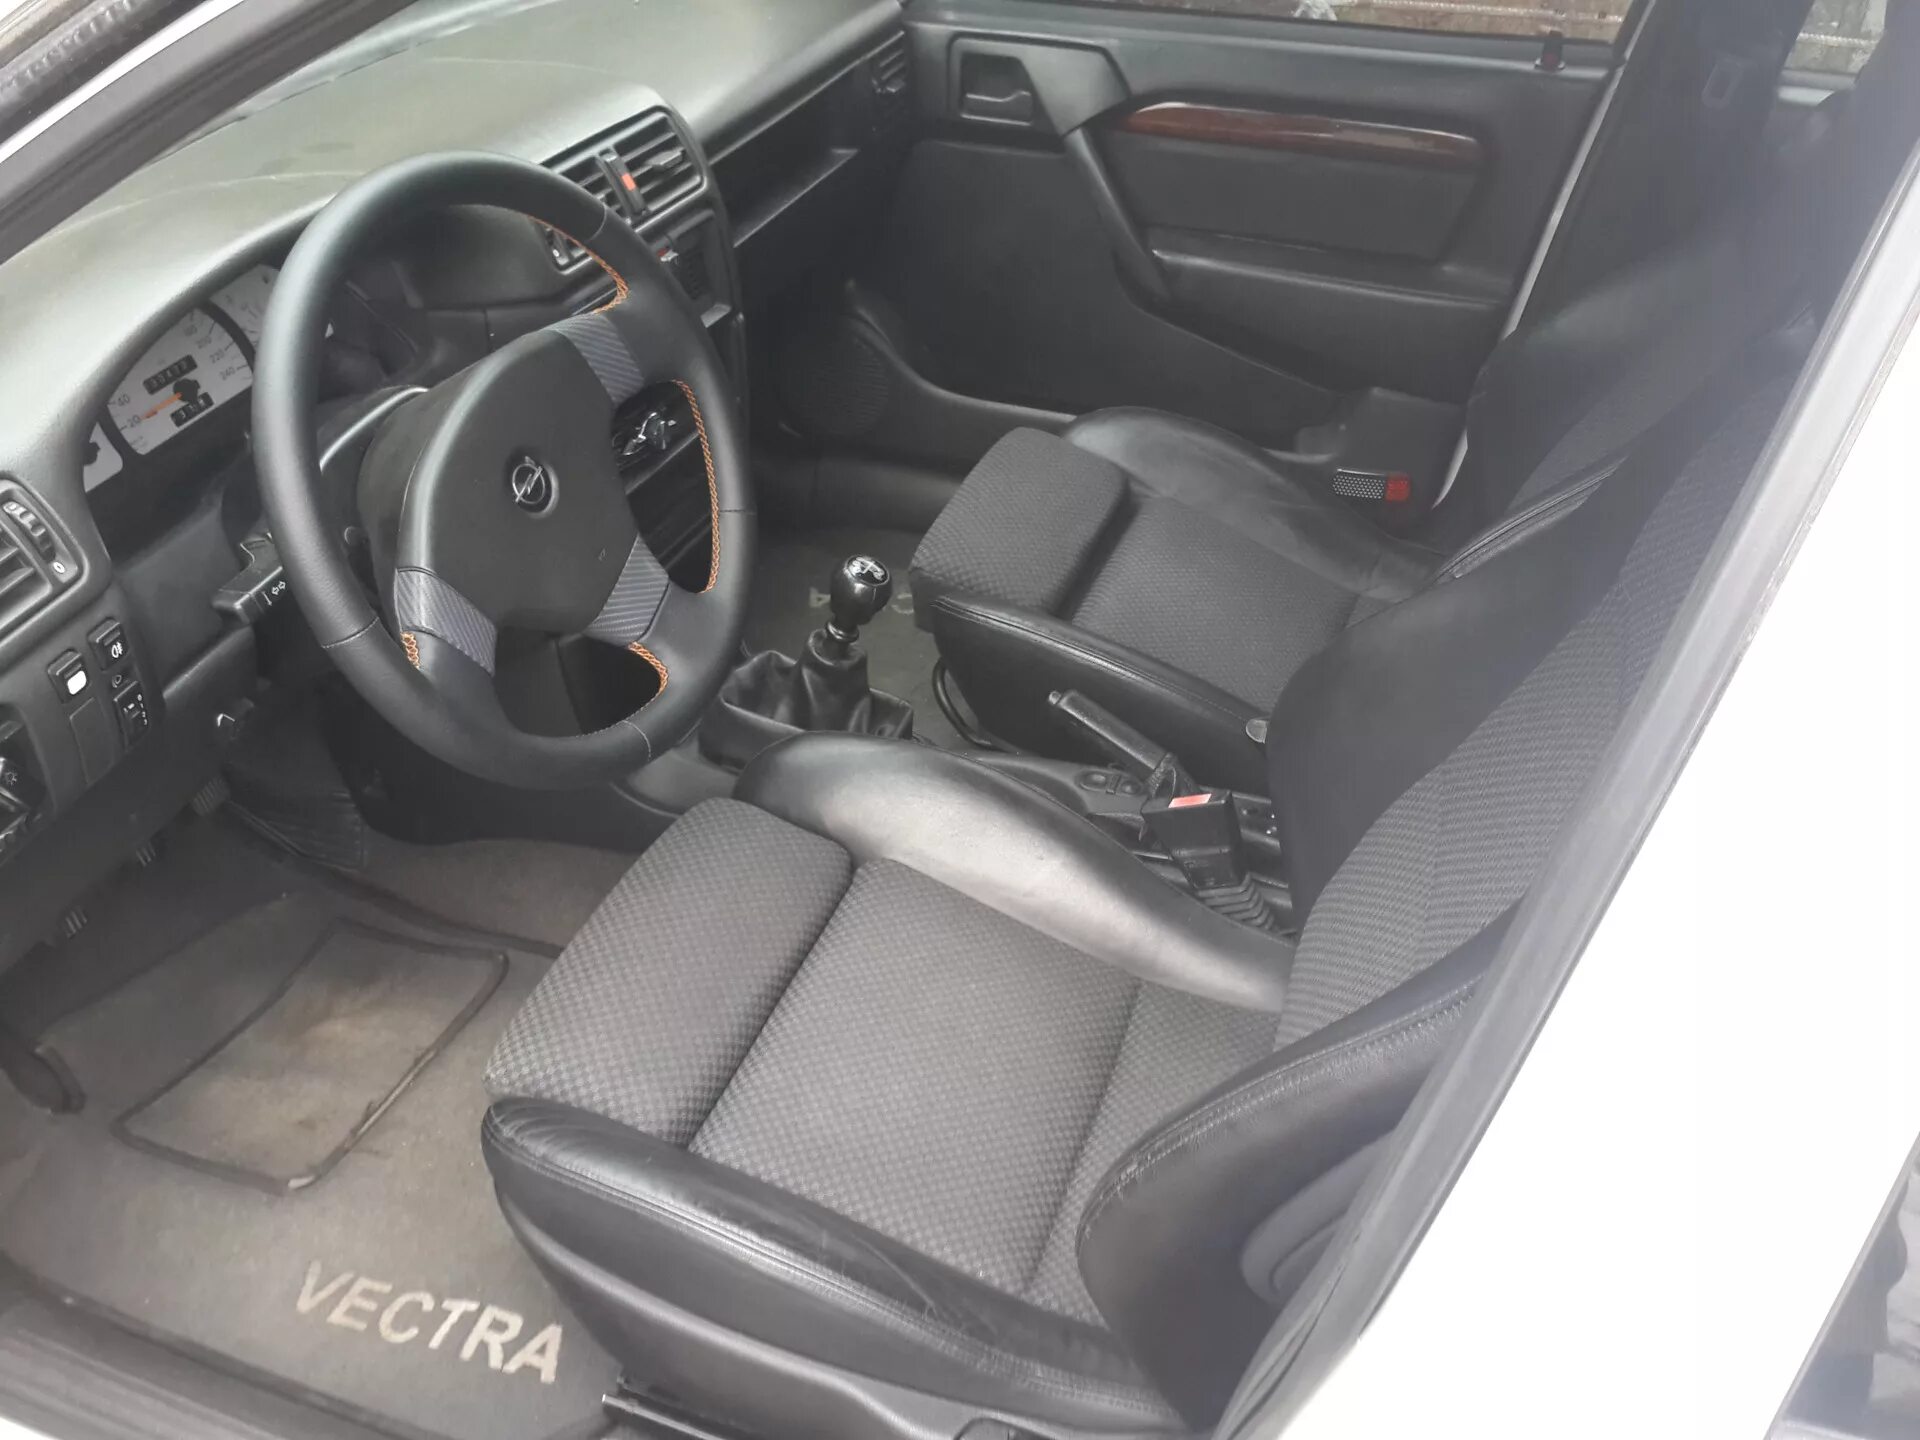 Opel Vectra b 2000 салон. Опель Вектра 2000 салон. Opel Vectra 2000 салон. Опель Вектра б 2000 салон. Опель вектра б салон